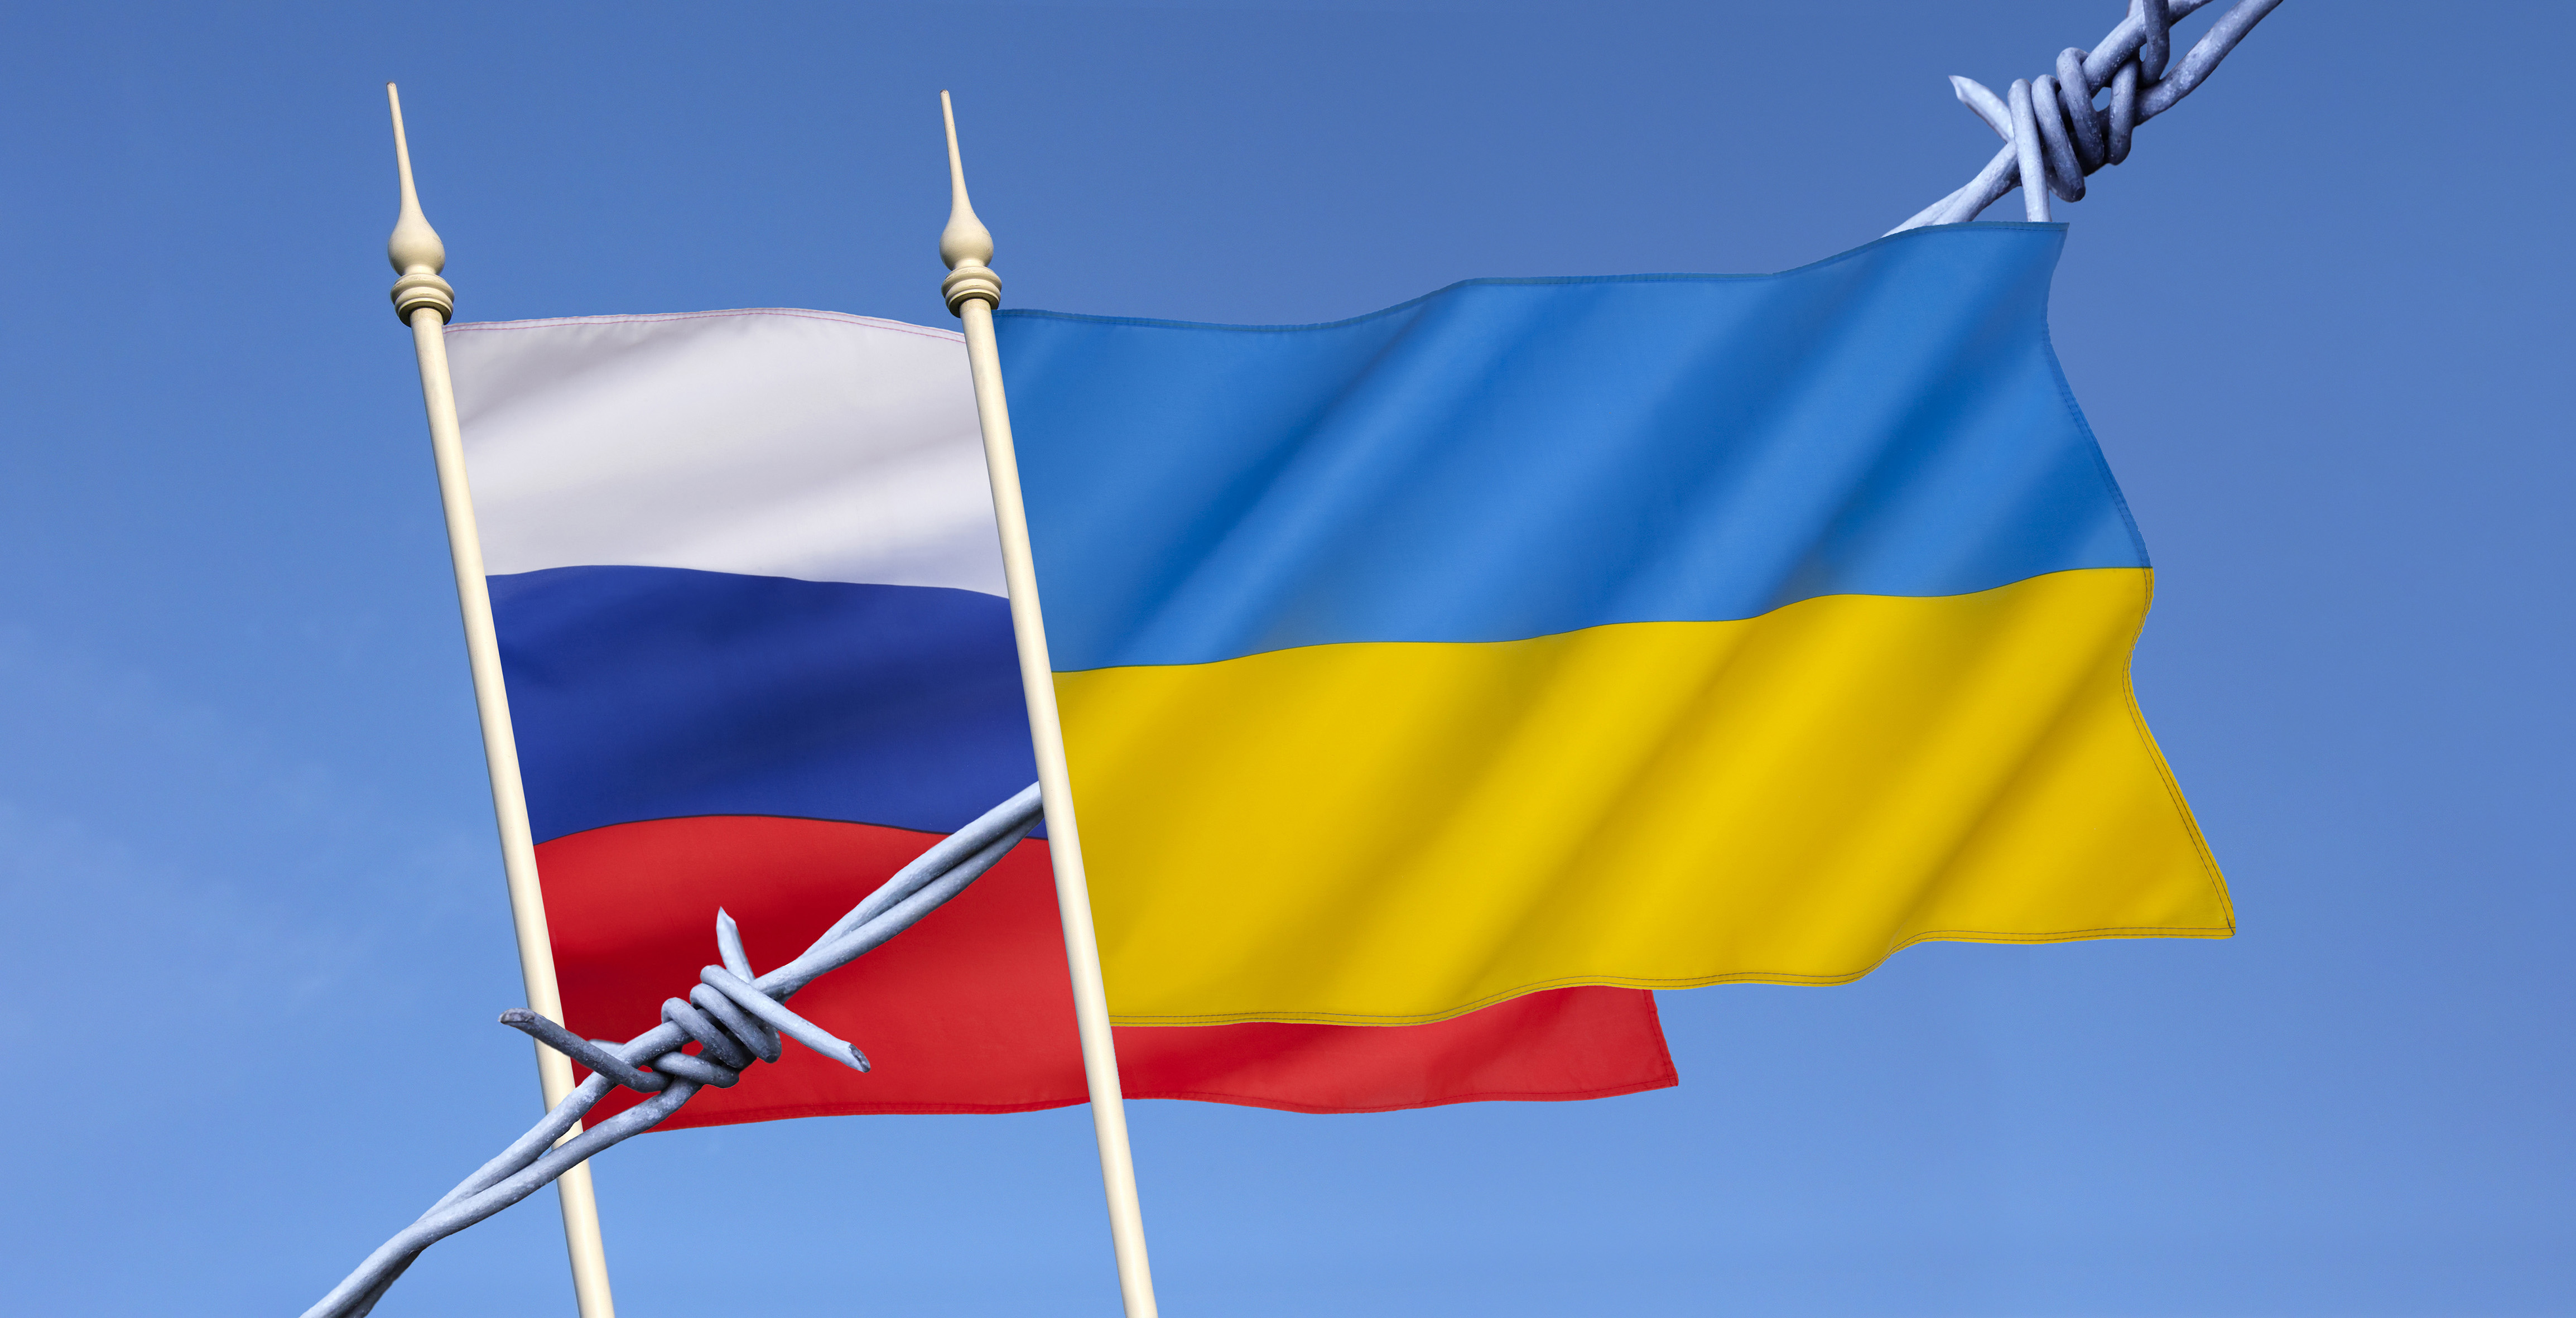 Macroeconomics: Ukraine & Russia - War & Its Risks